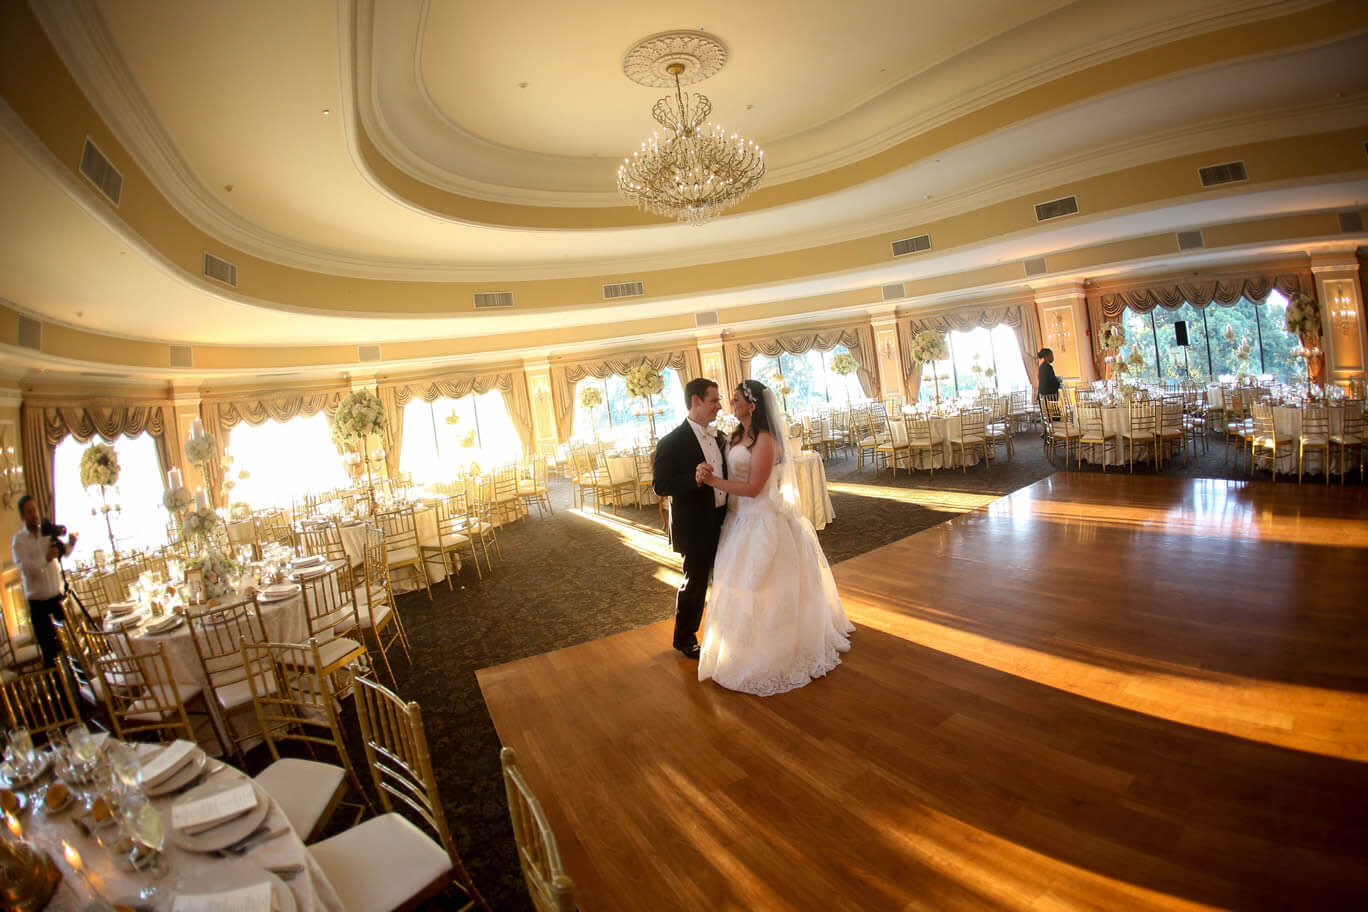 oheka ballroom with bride and groom